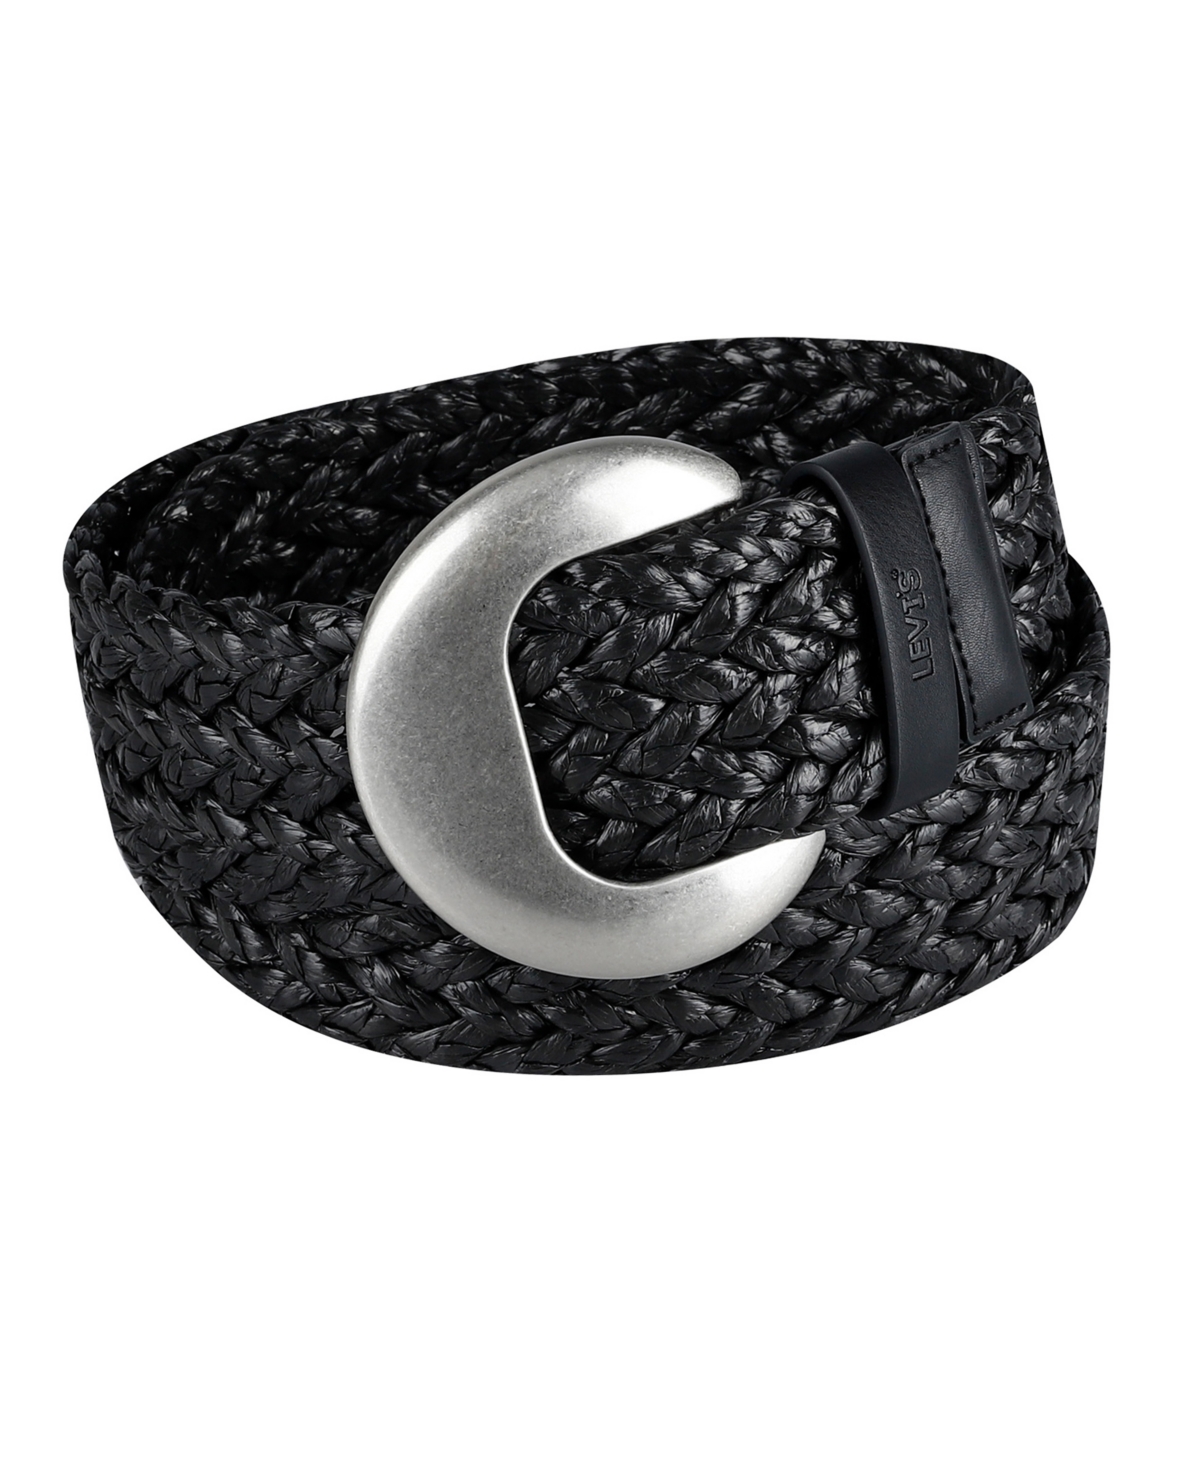 Levi's Women's Fully Adjustable Raffia Belt With Statement Buckle In Black